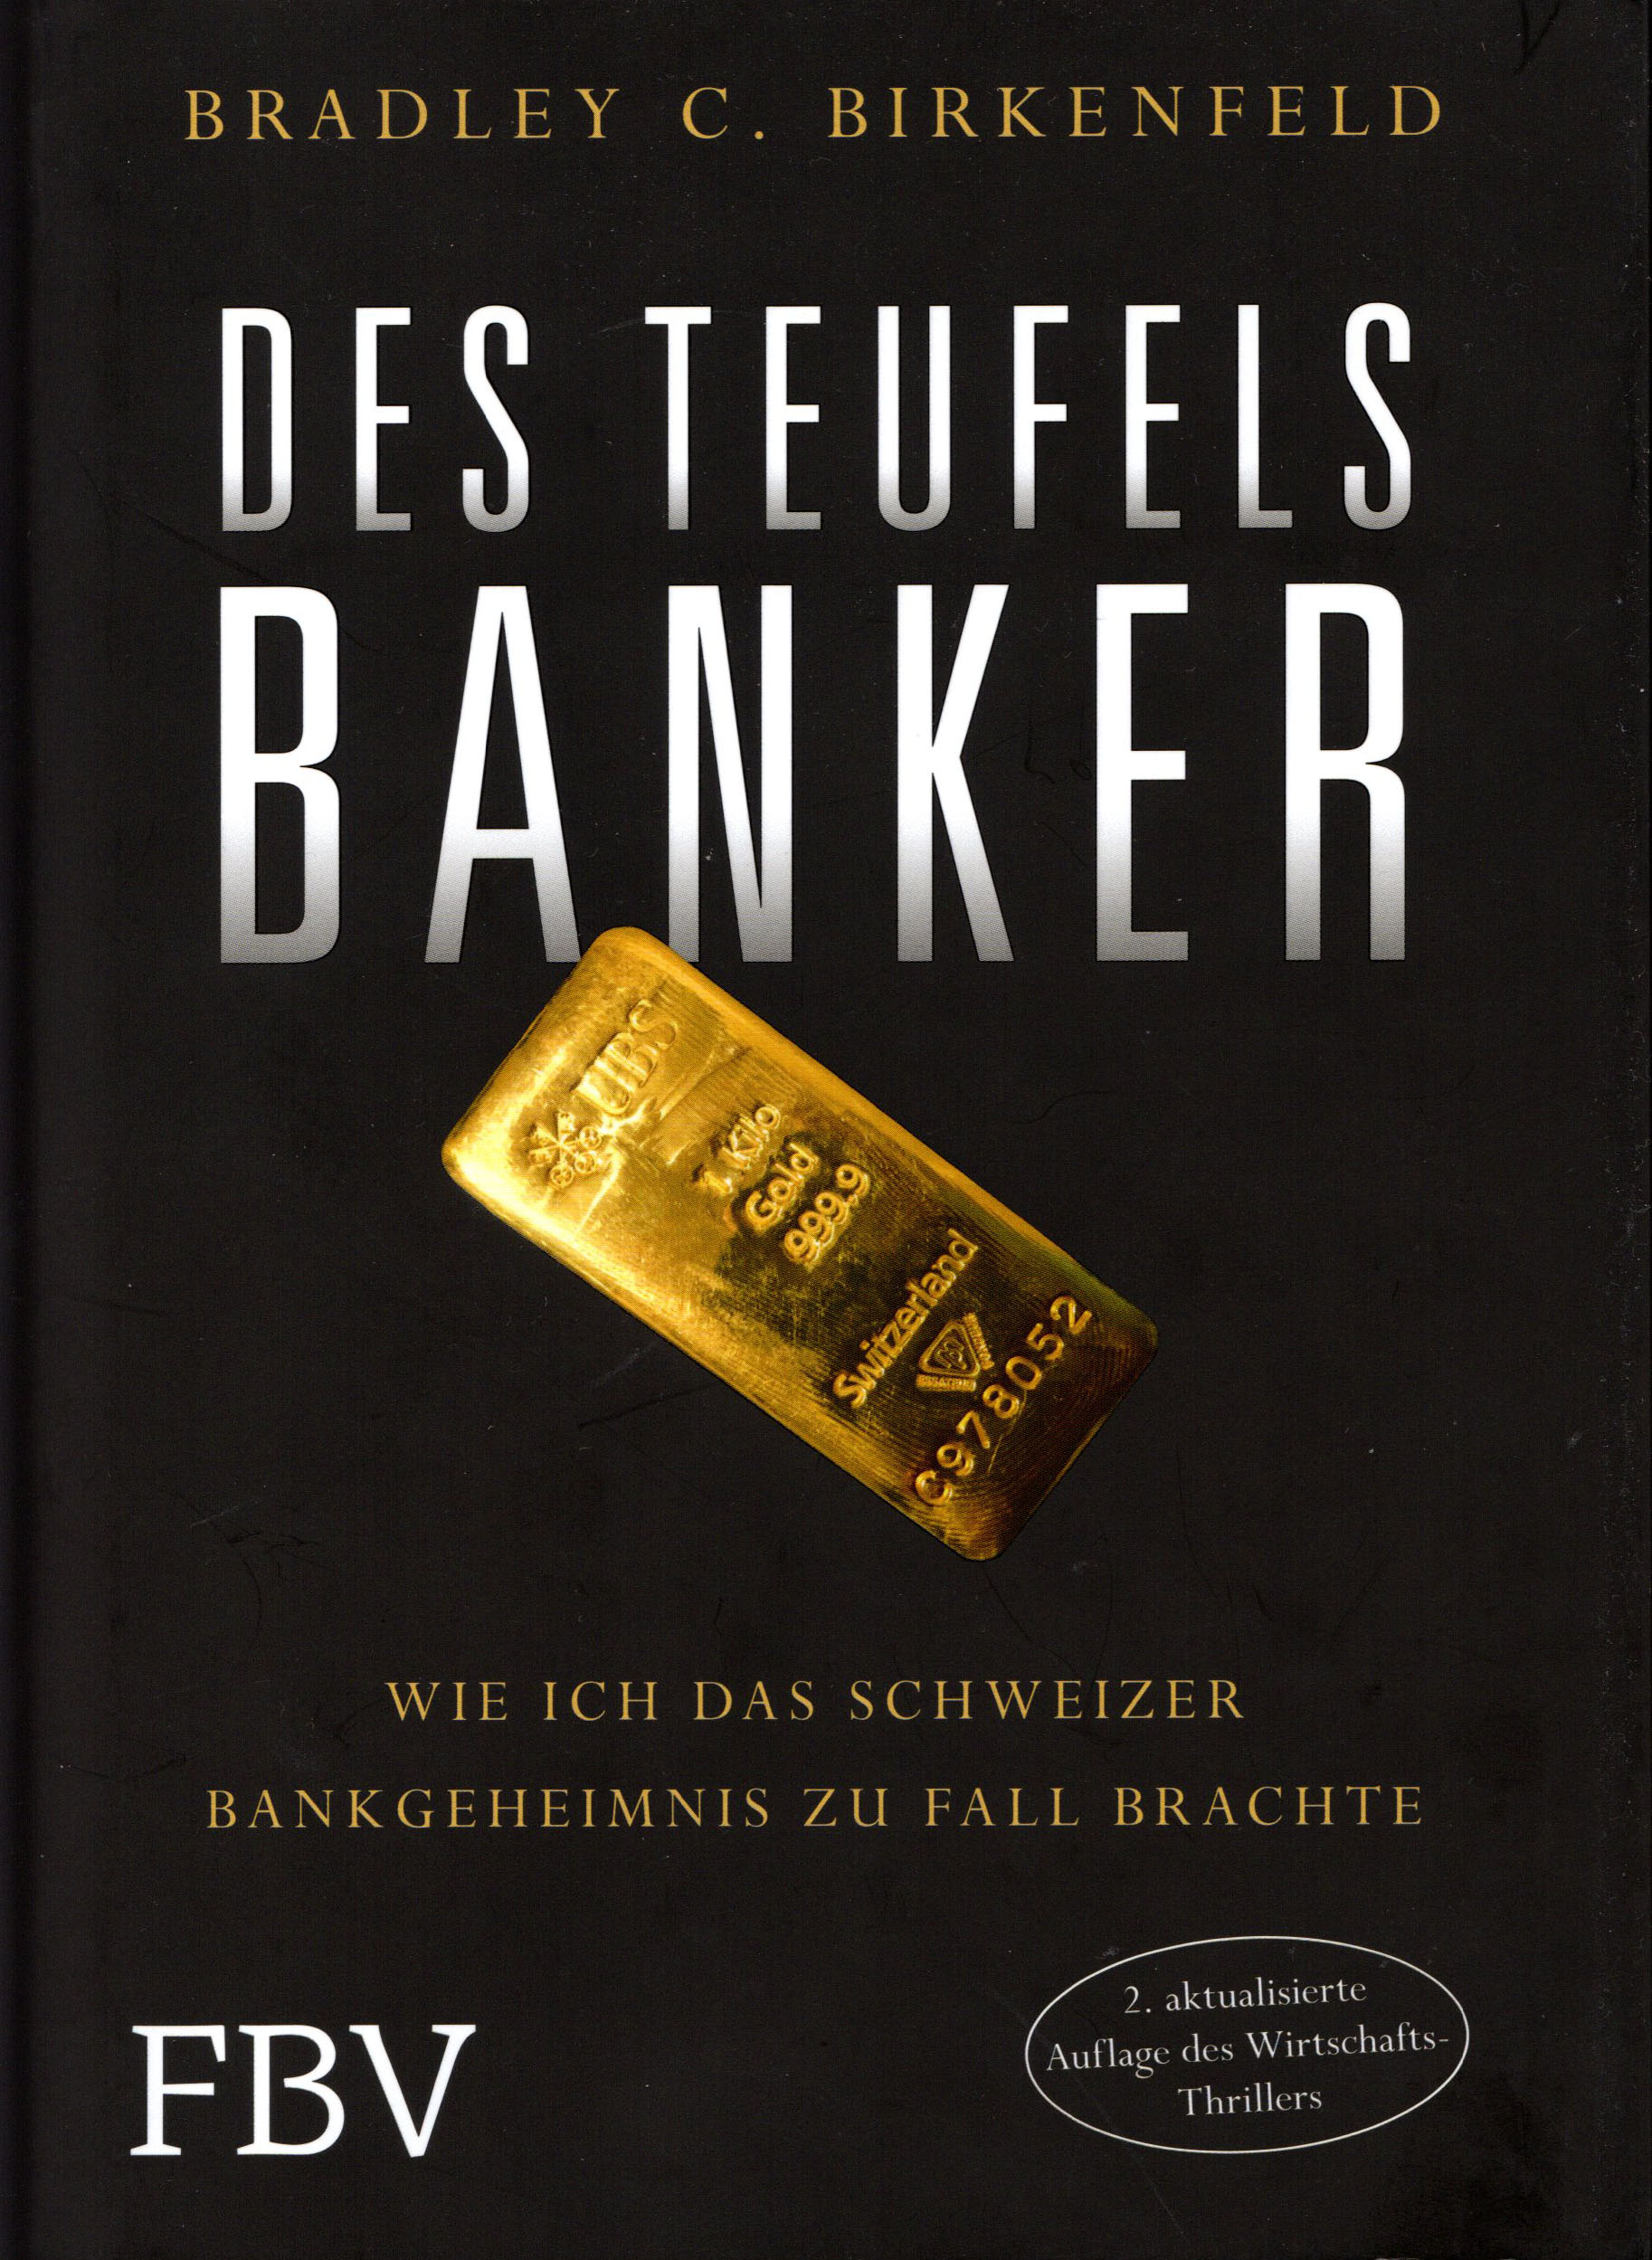 TEUFELS BANKER